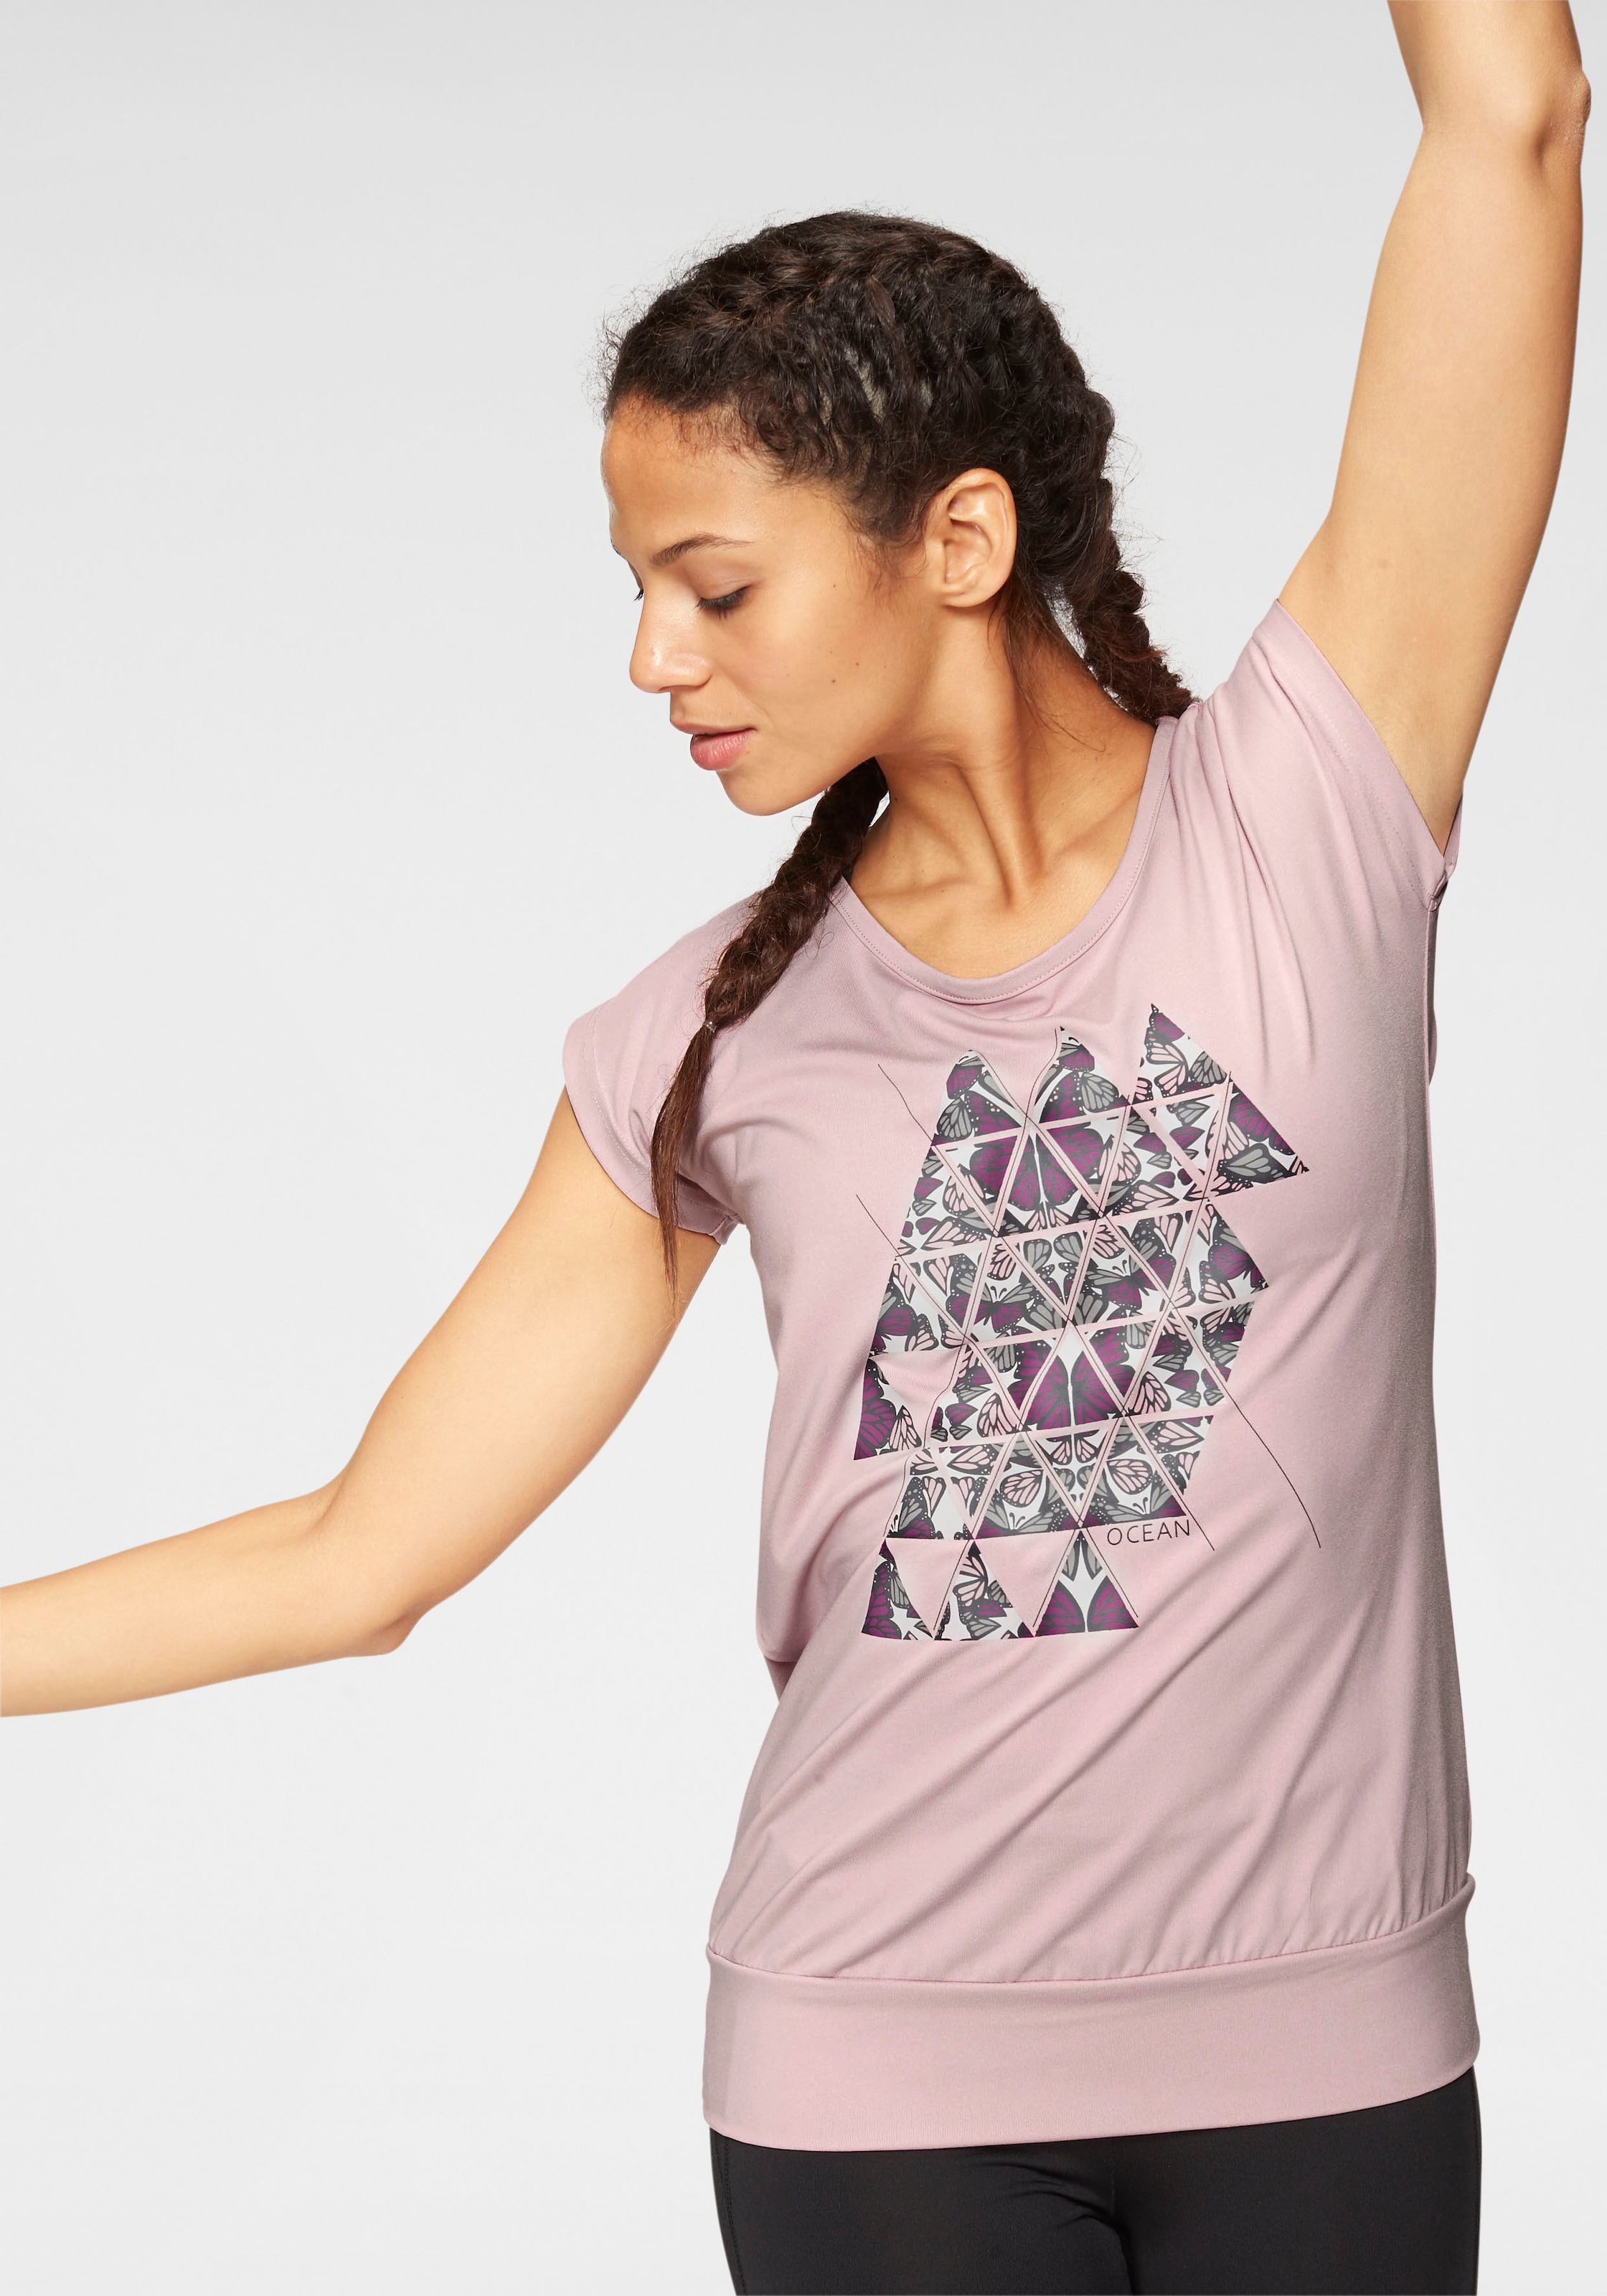 Yoga Shirts günstig kaufen » bei sportdeal24